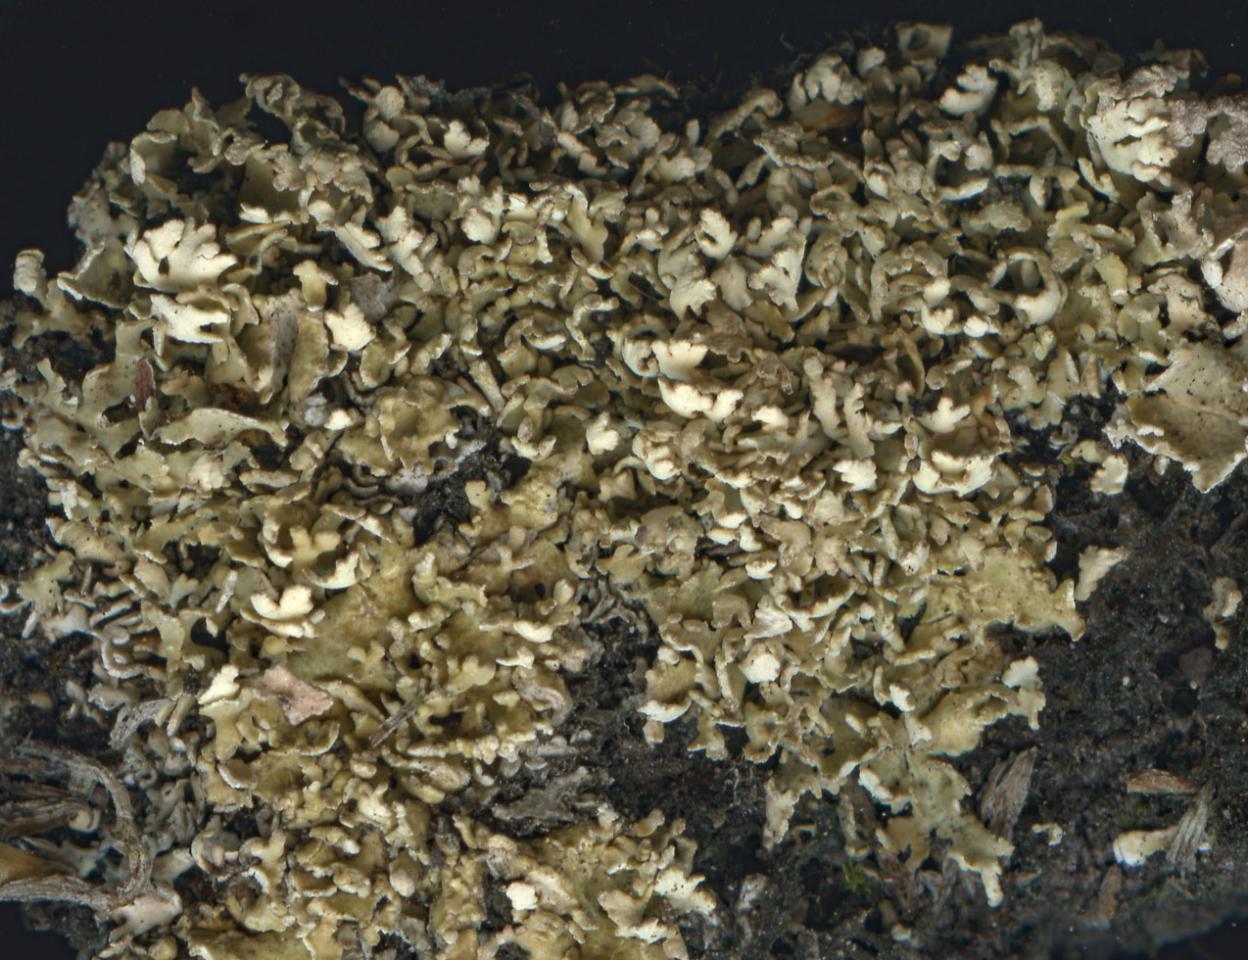 Cladonia foliacea m. angustiloba, Clogher Head, Dingle, Co. Kerry